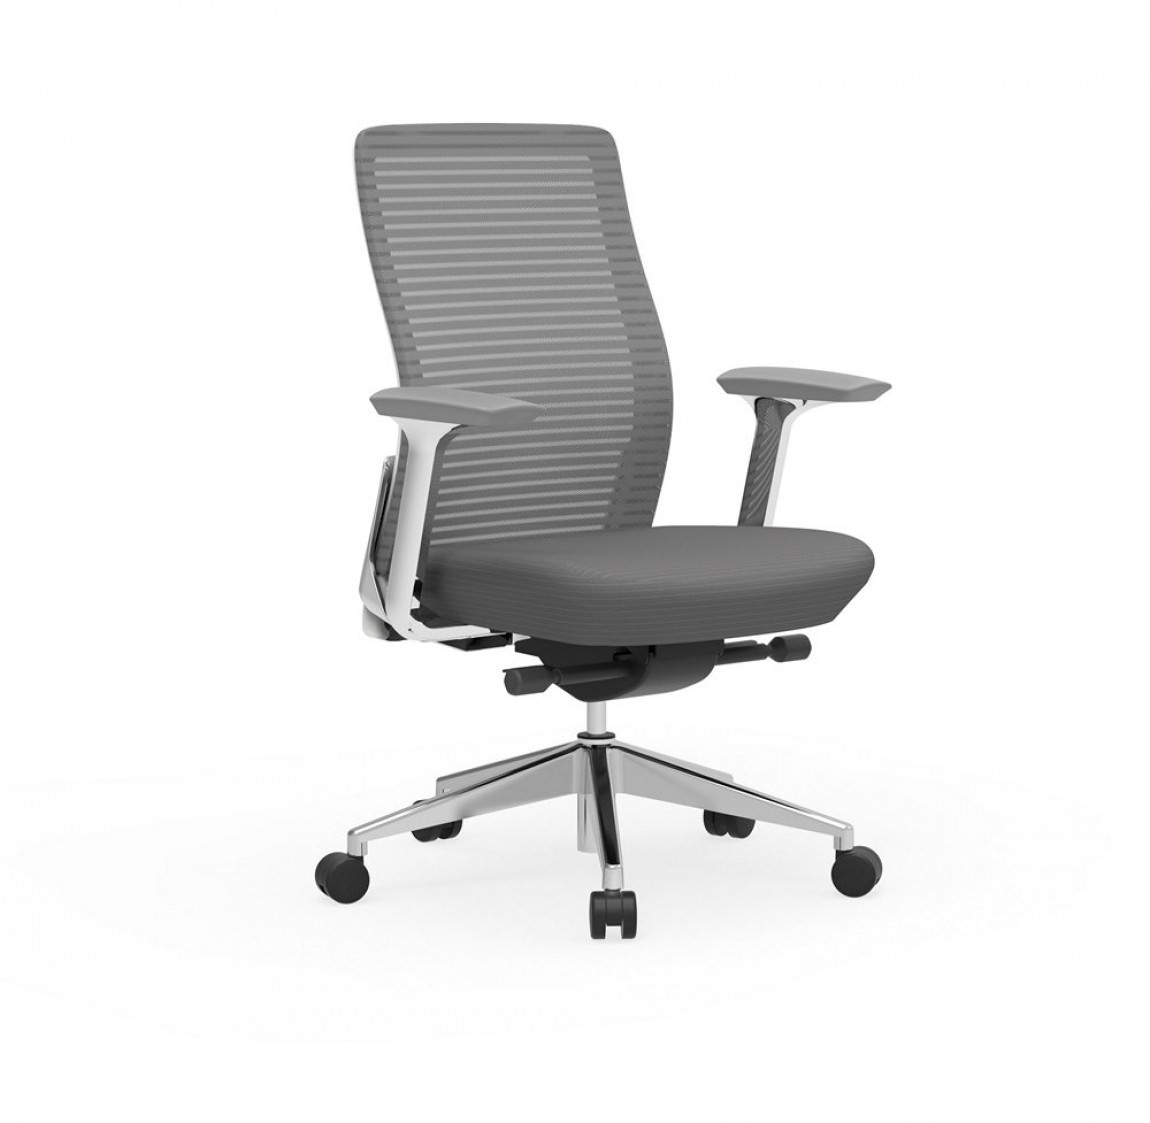 https://madisonliquidators.com/images/p/1150/8288-gray-mesh-back-conference-room-chair-1.jpg